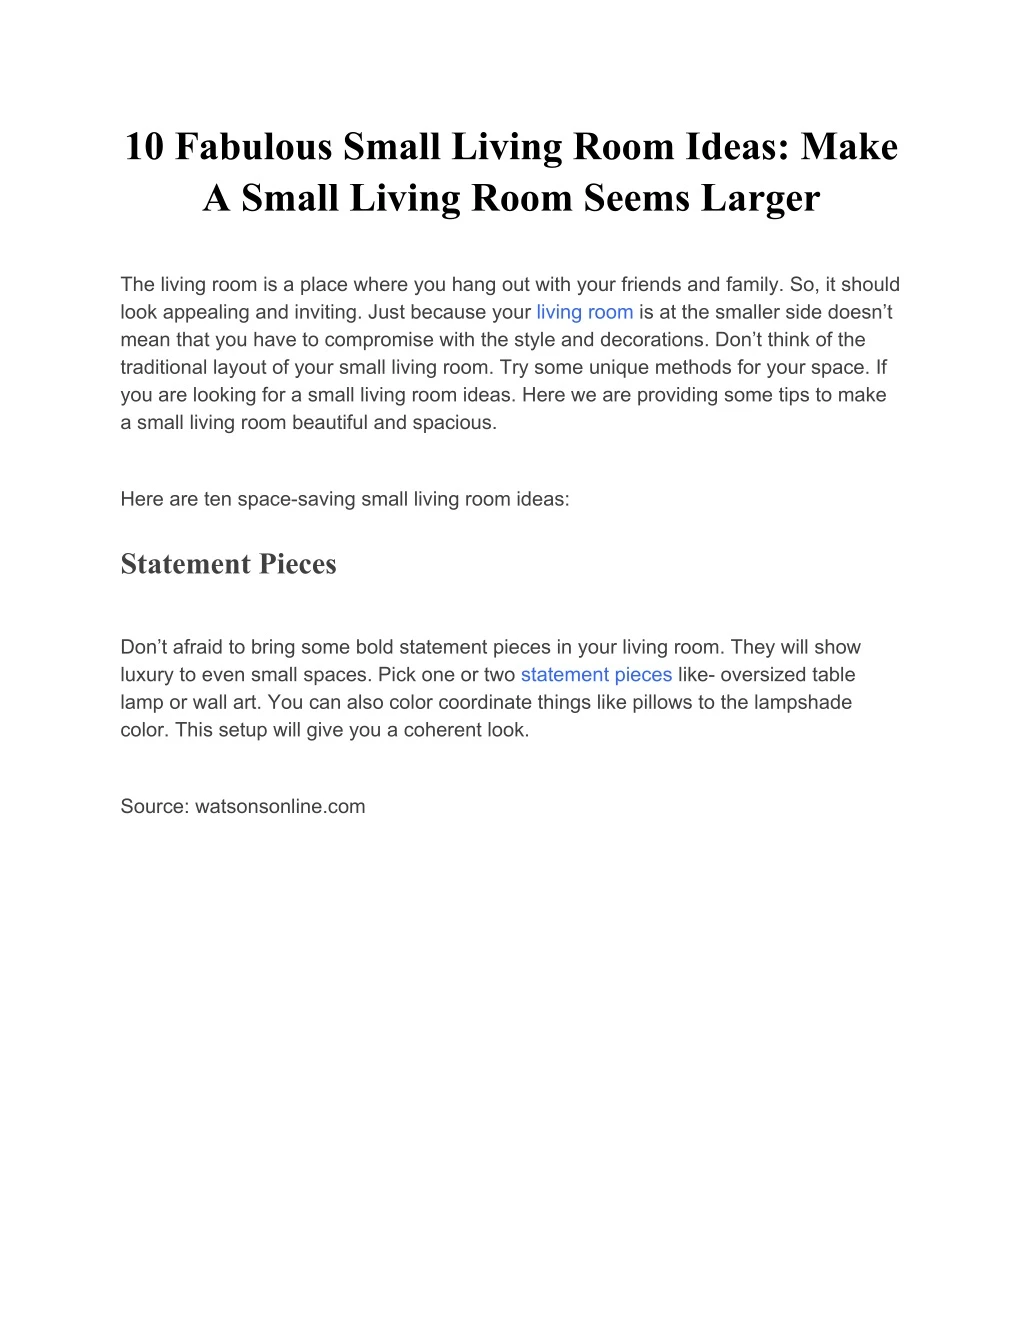 10 fabulous small living room ideas make a small